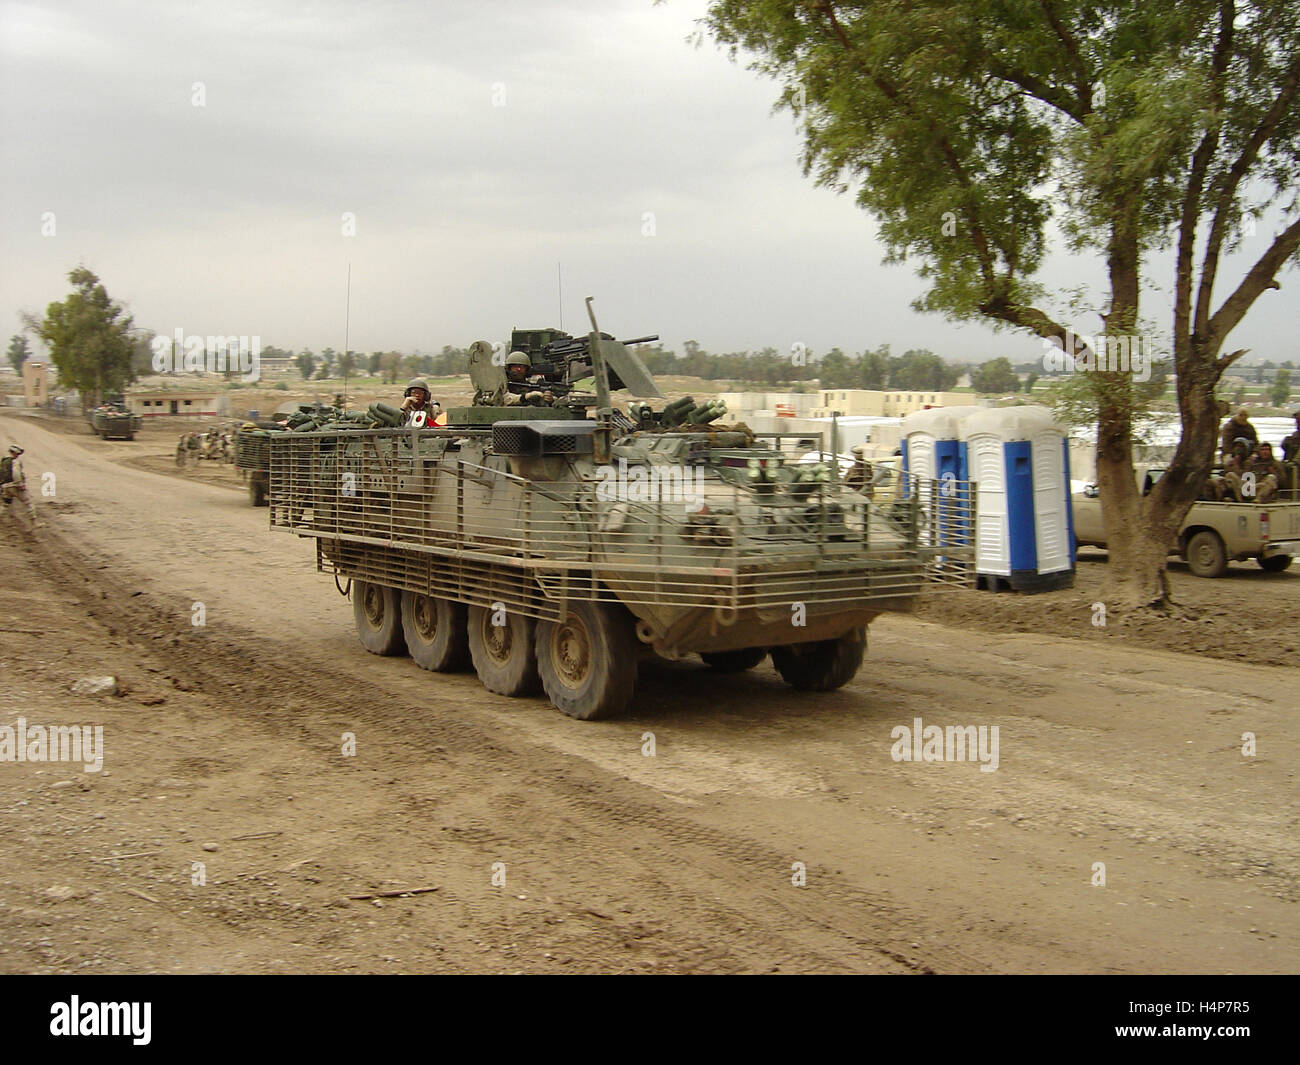 22nd November 2004 A U.S. Army Stryker ICV driving through FOB (Forward Operating Base) Marez, Mosul, northern Iraq. Stock Photo